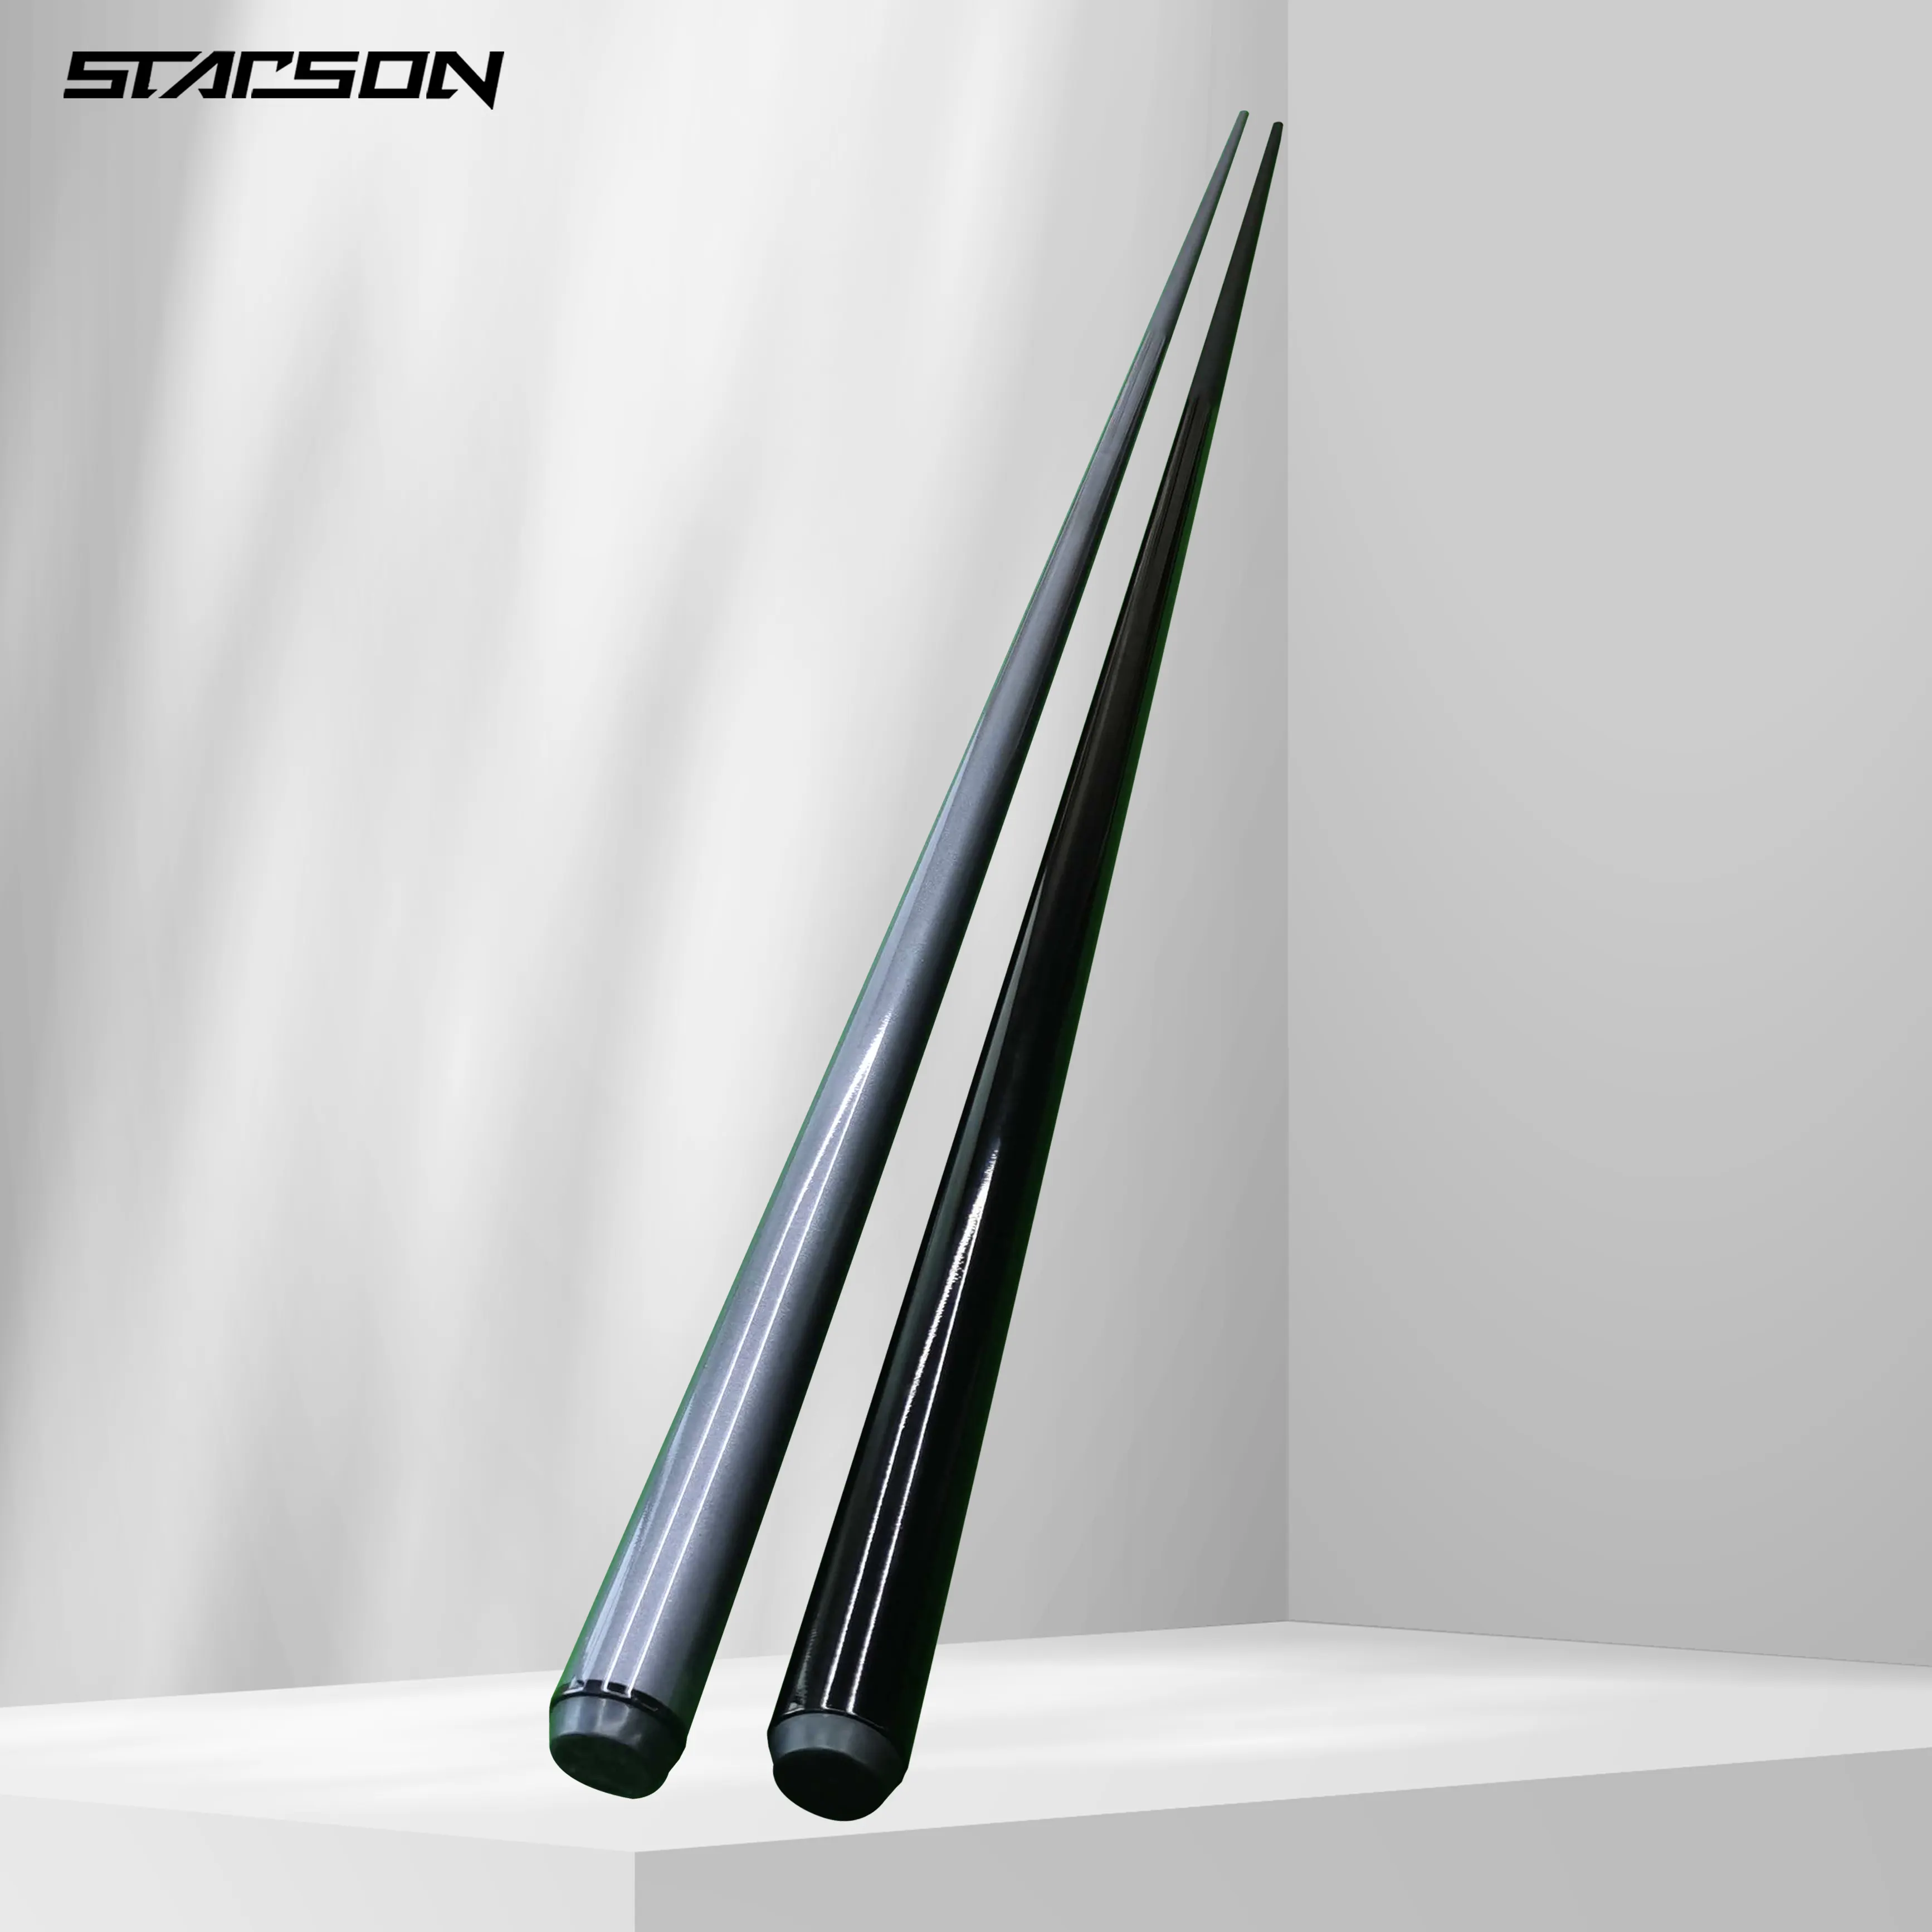 WholeSale Premium Carbon Fibre Technology Billiard Cue Shaft 10mm Tip One PC Straightless Pool Cue Hardening Carom Cue Stick